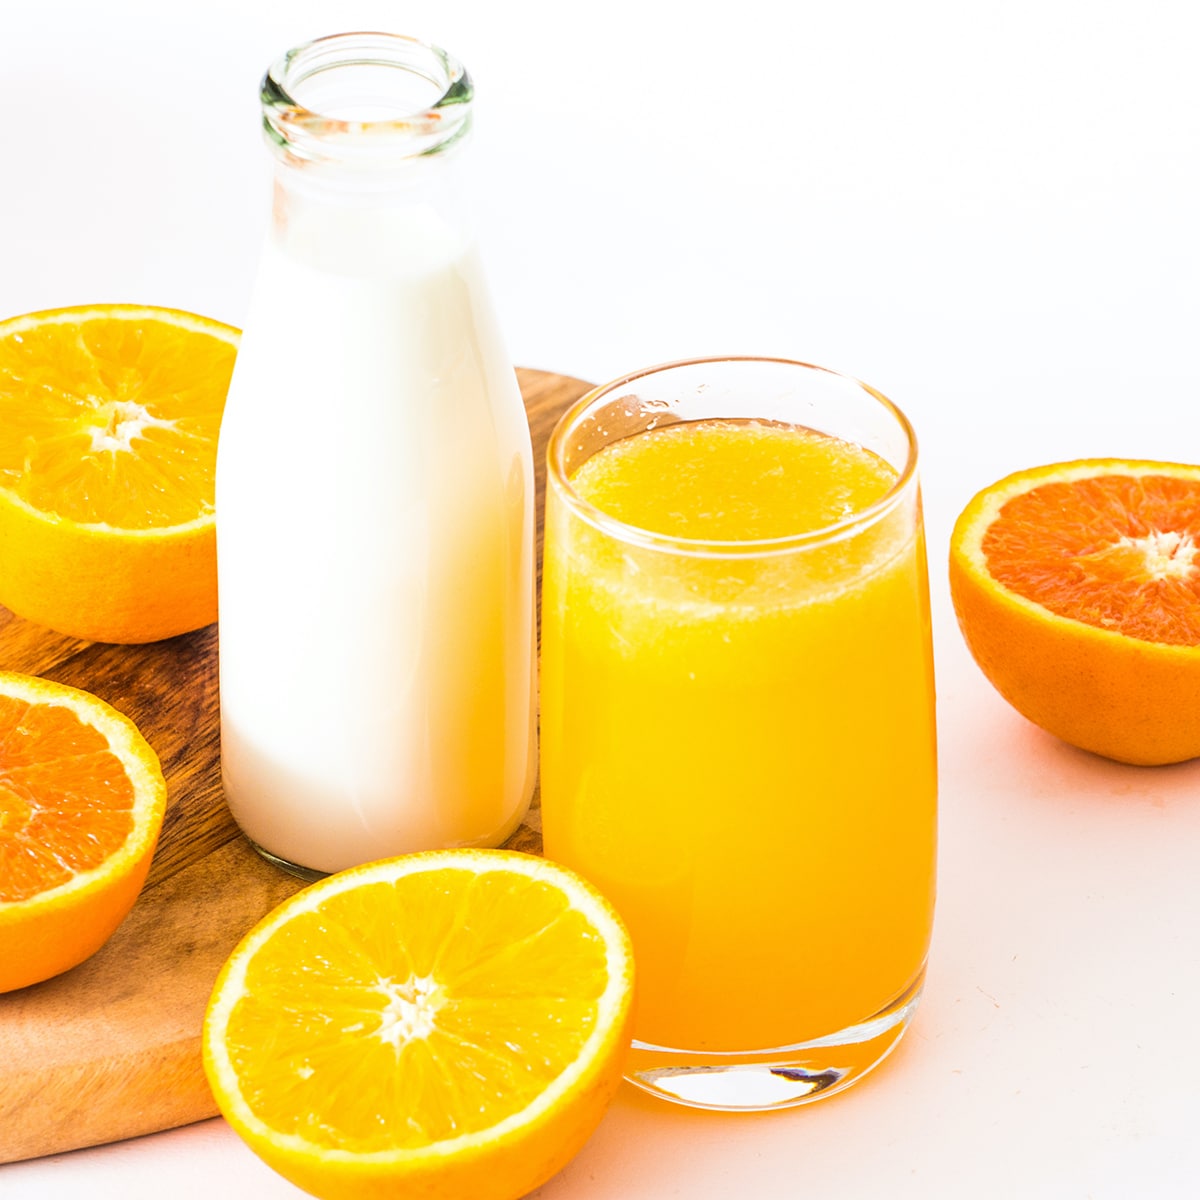 A glass jar of buttermilk next to a glass of orange juice.